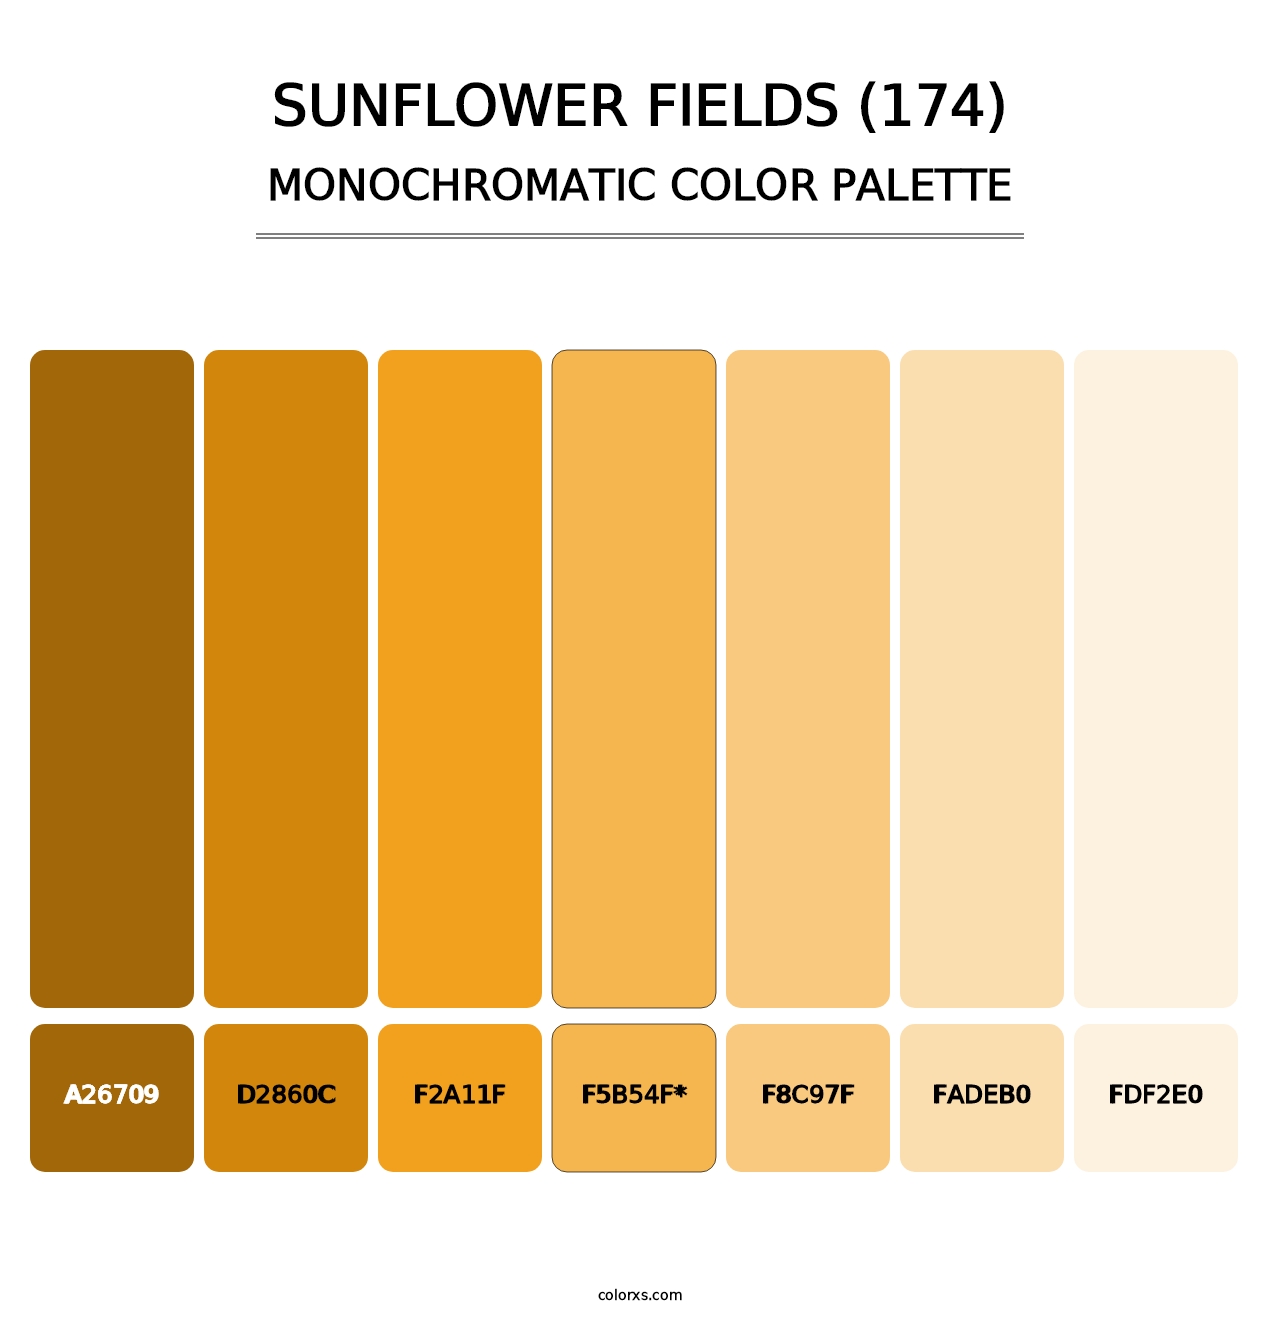 Sunflower Fields (174) - Monochromatic Color Palette